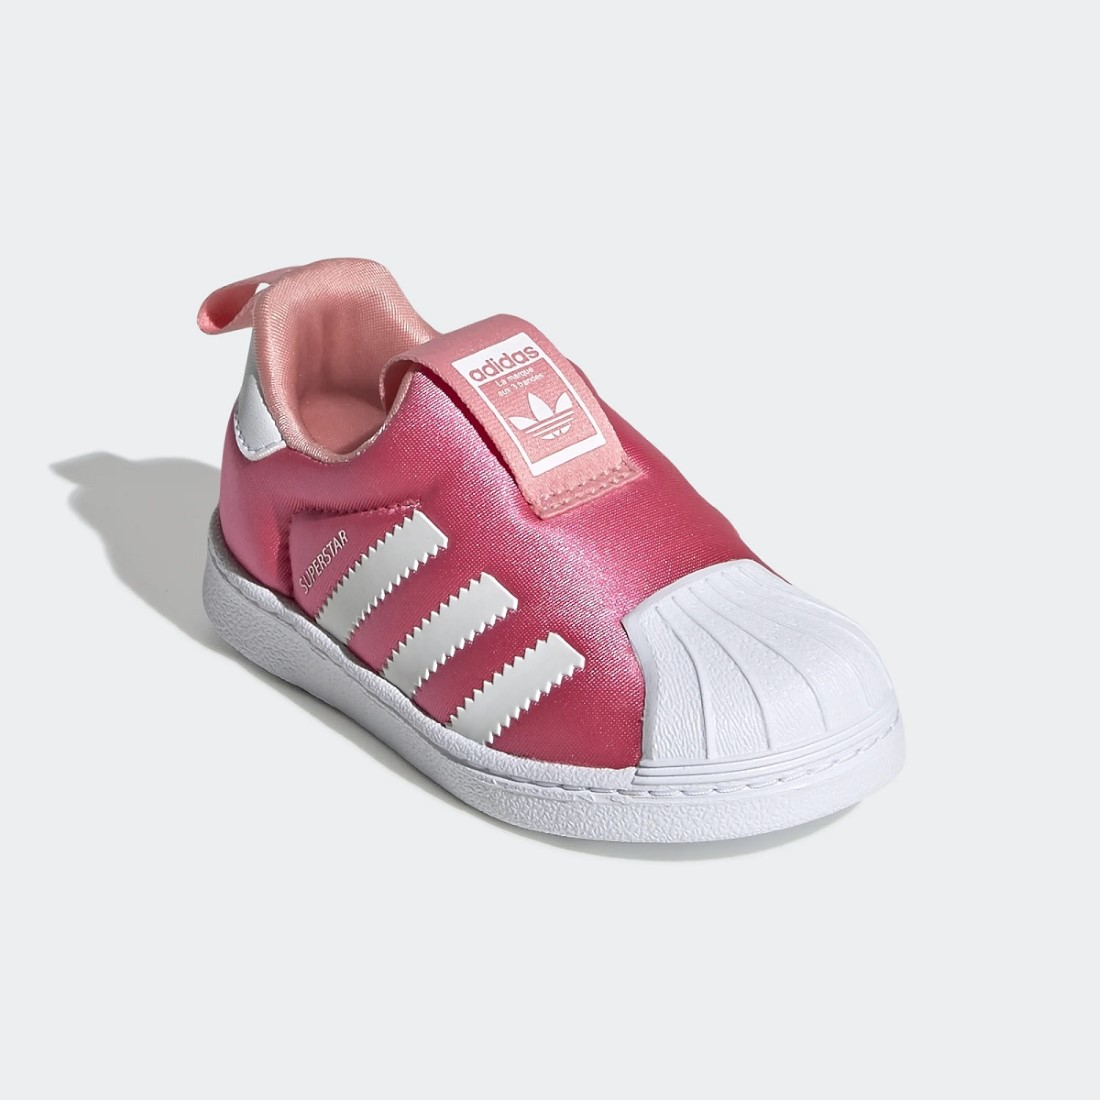 Adidas Superstar Feminino: Branco, Preto, Rosa